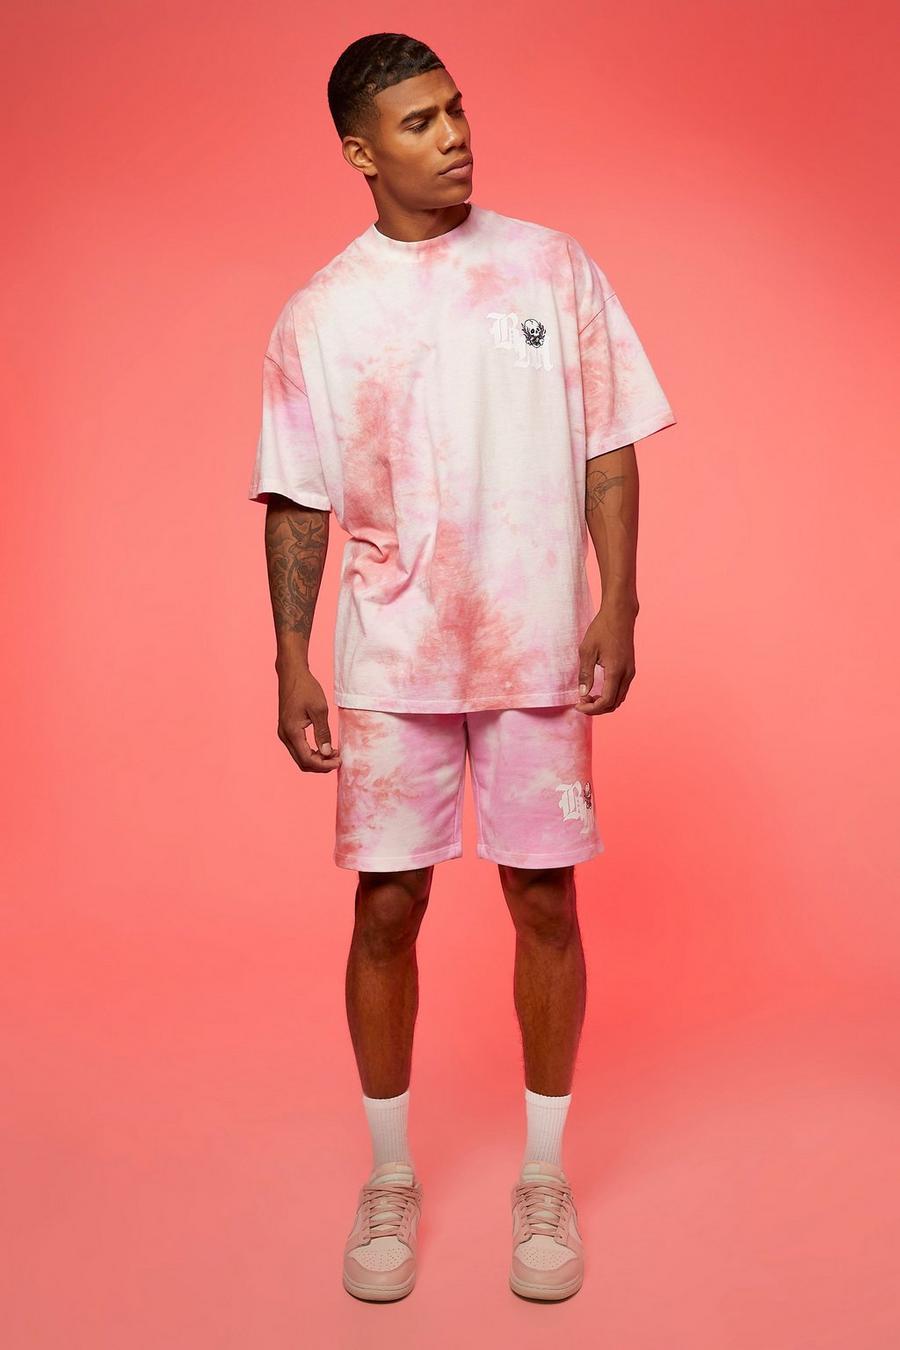 Ensemble oversize effet tie dye avec t-shirt et short, Pink rose